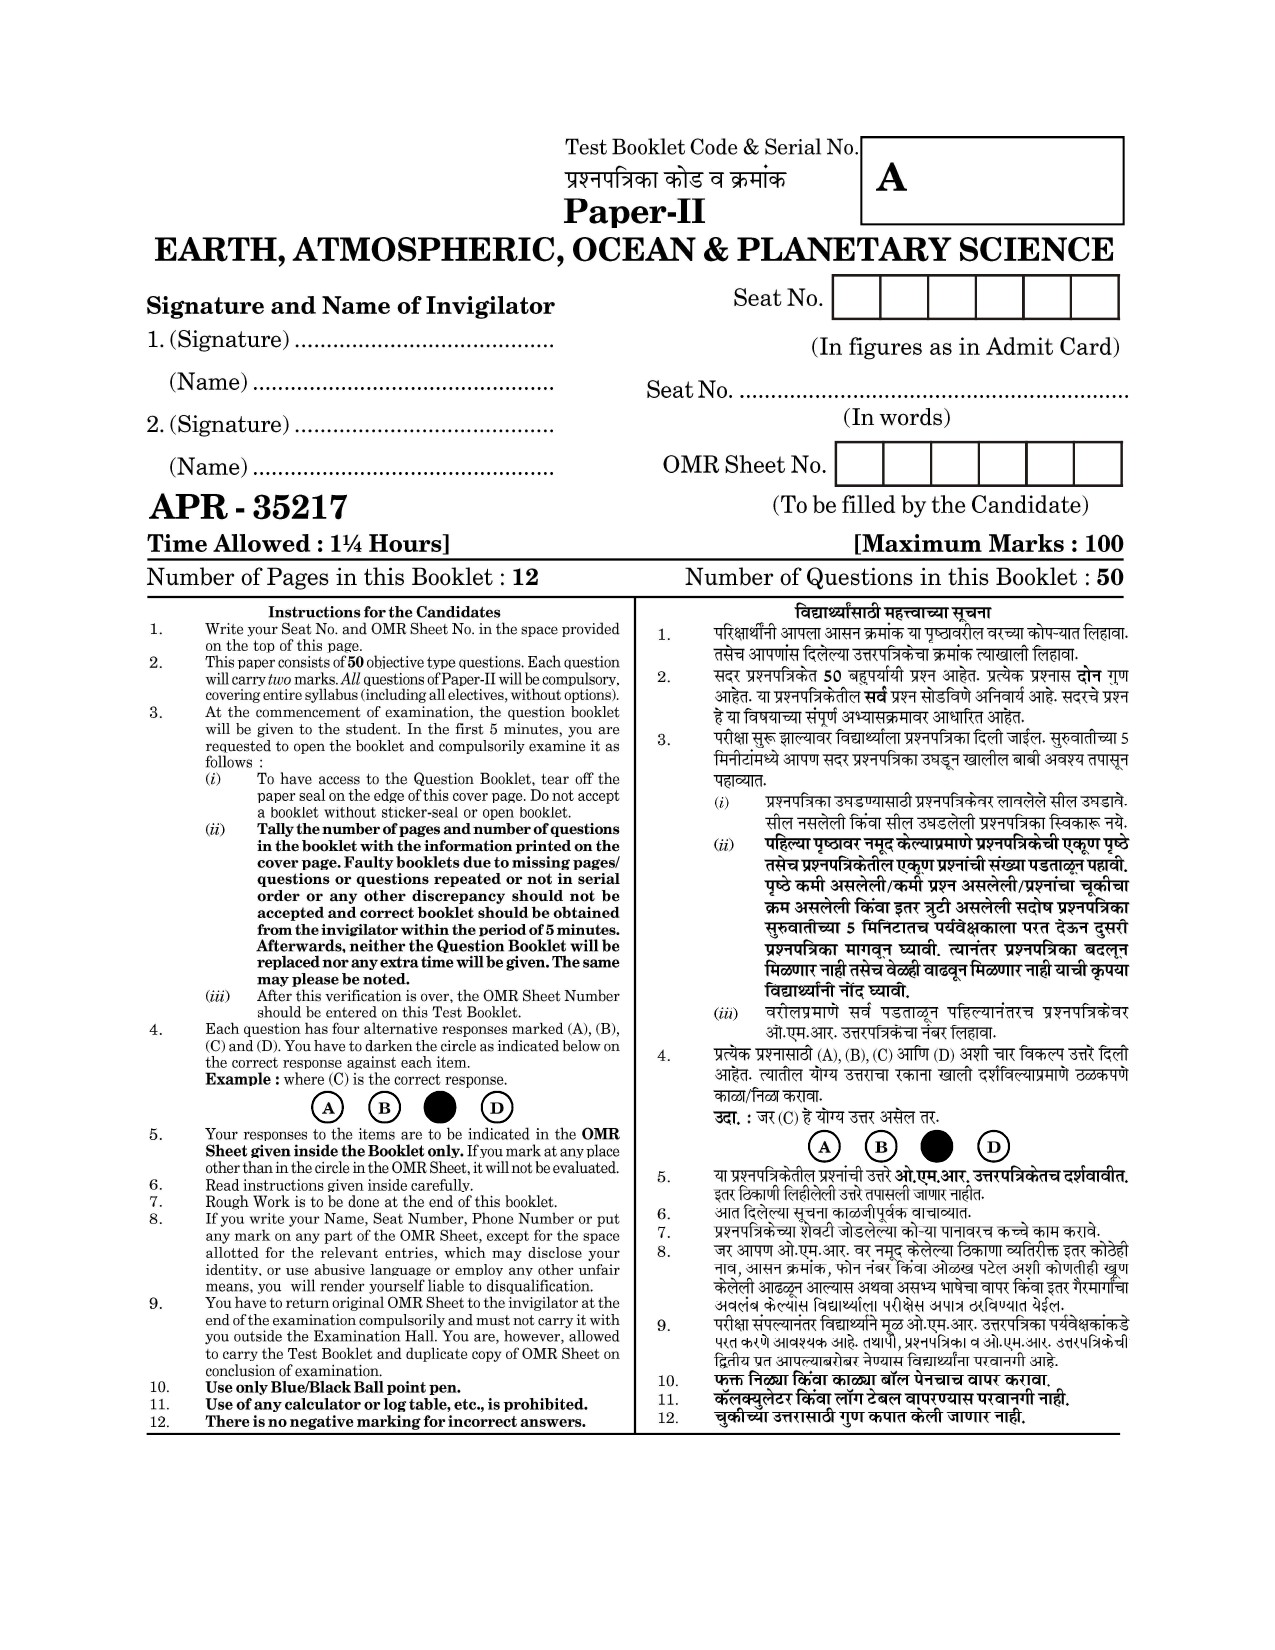 Maharashtra SET Earth Atmospheric Ocean Planetary Science Question Paper II April 2017 1